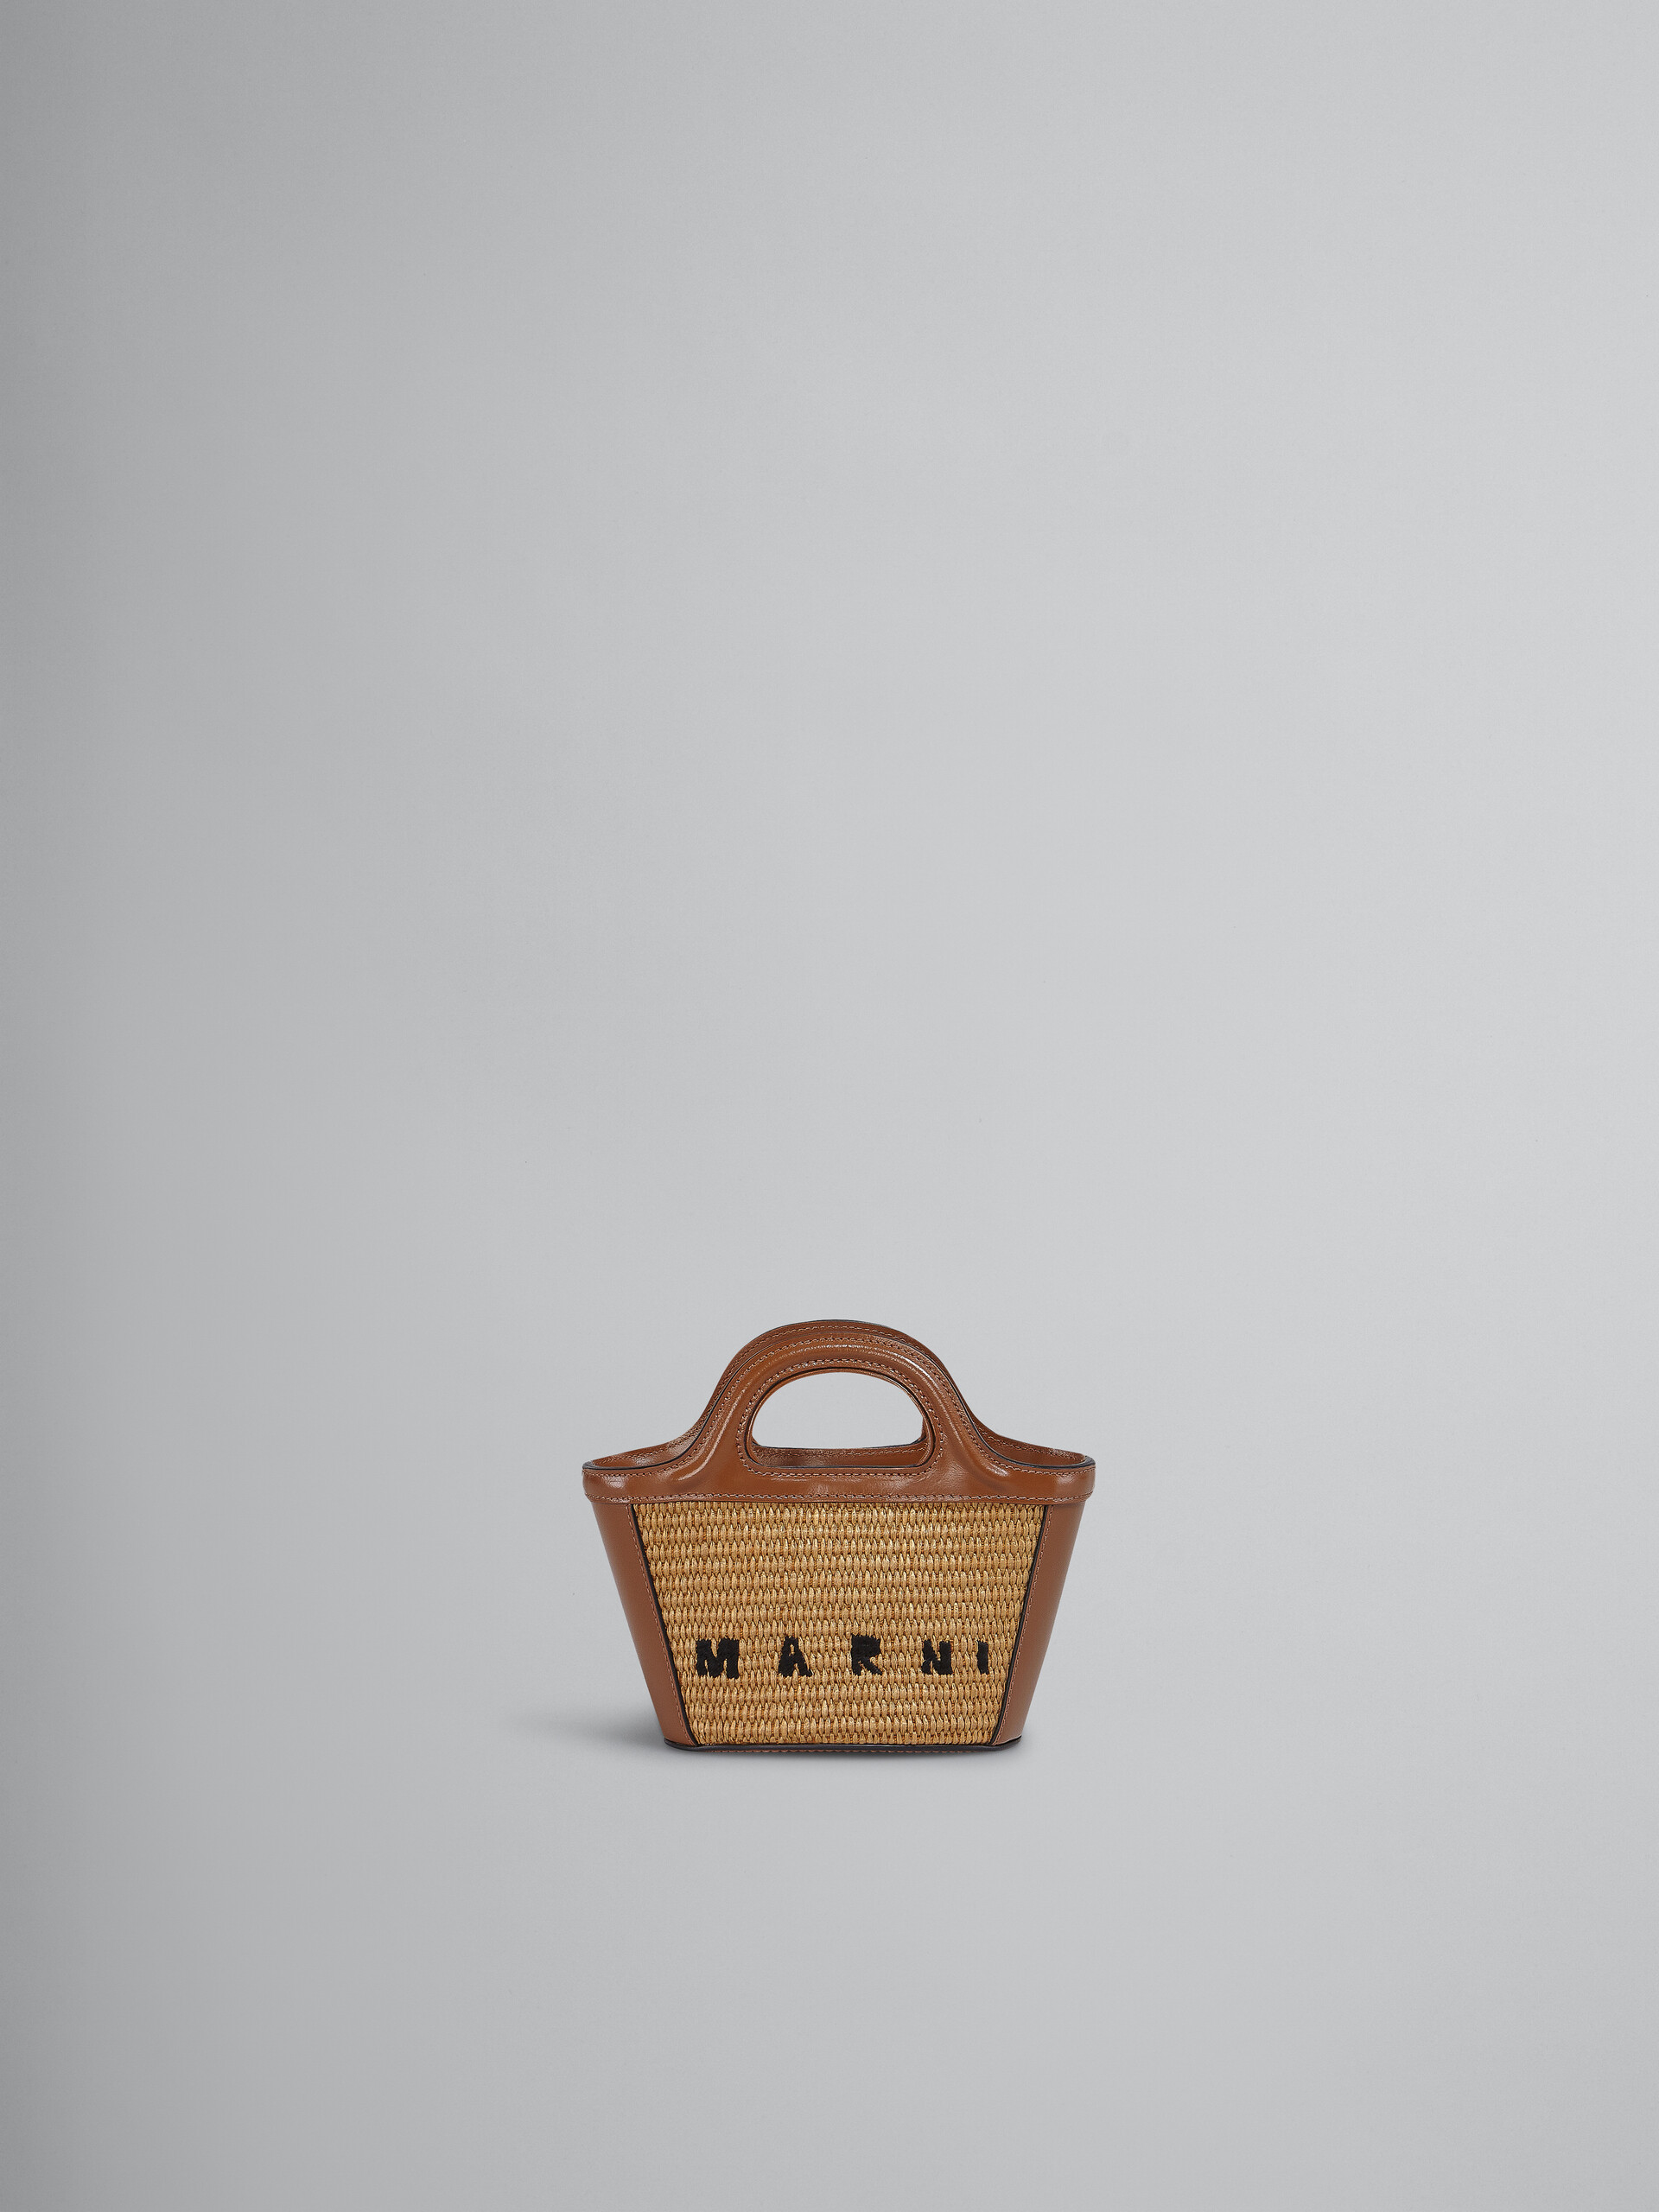 TROPICALIA micro bag in brown leather and raffia - Handbags - Image 1